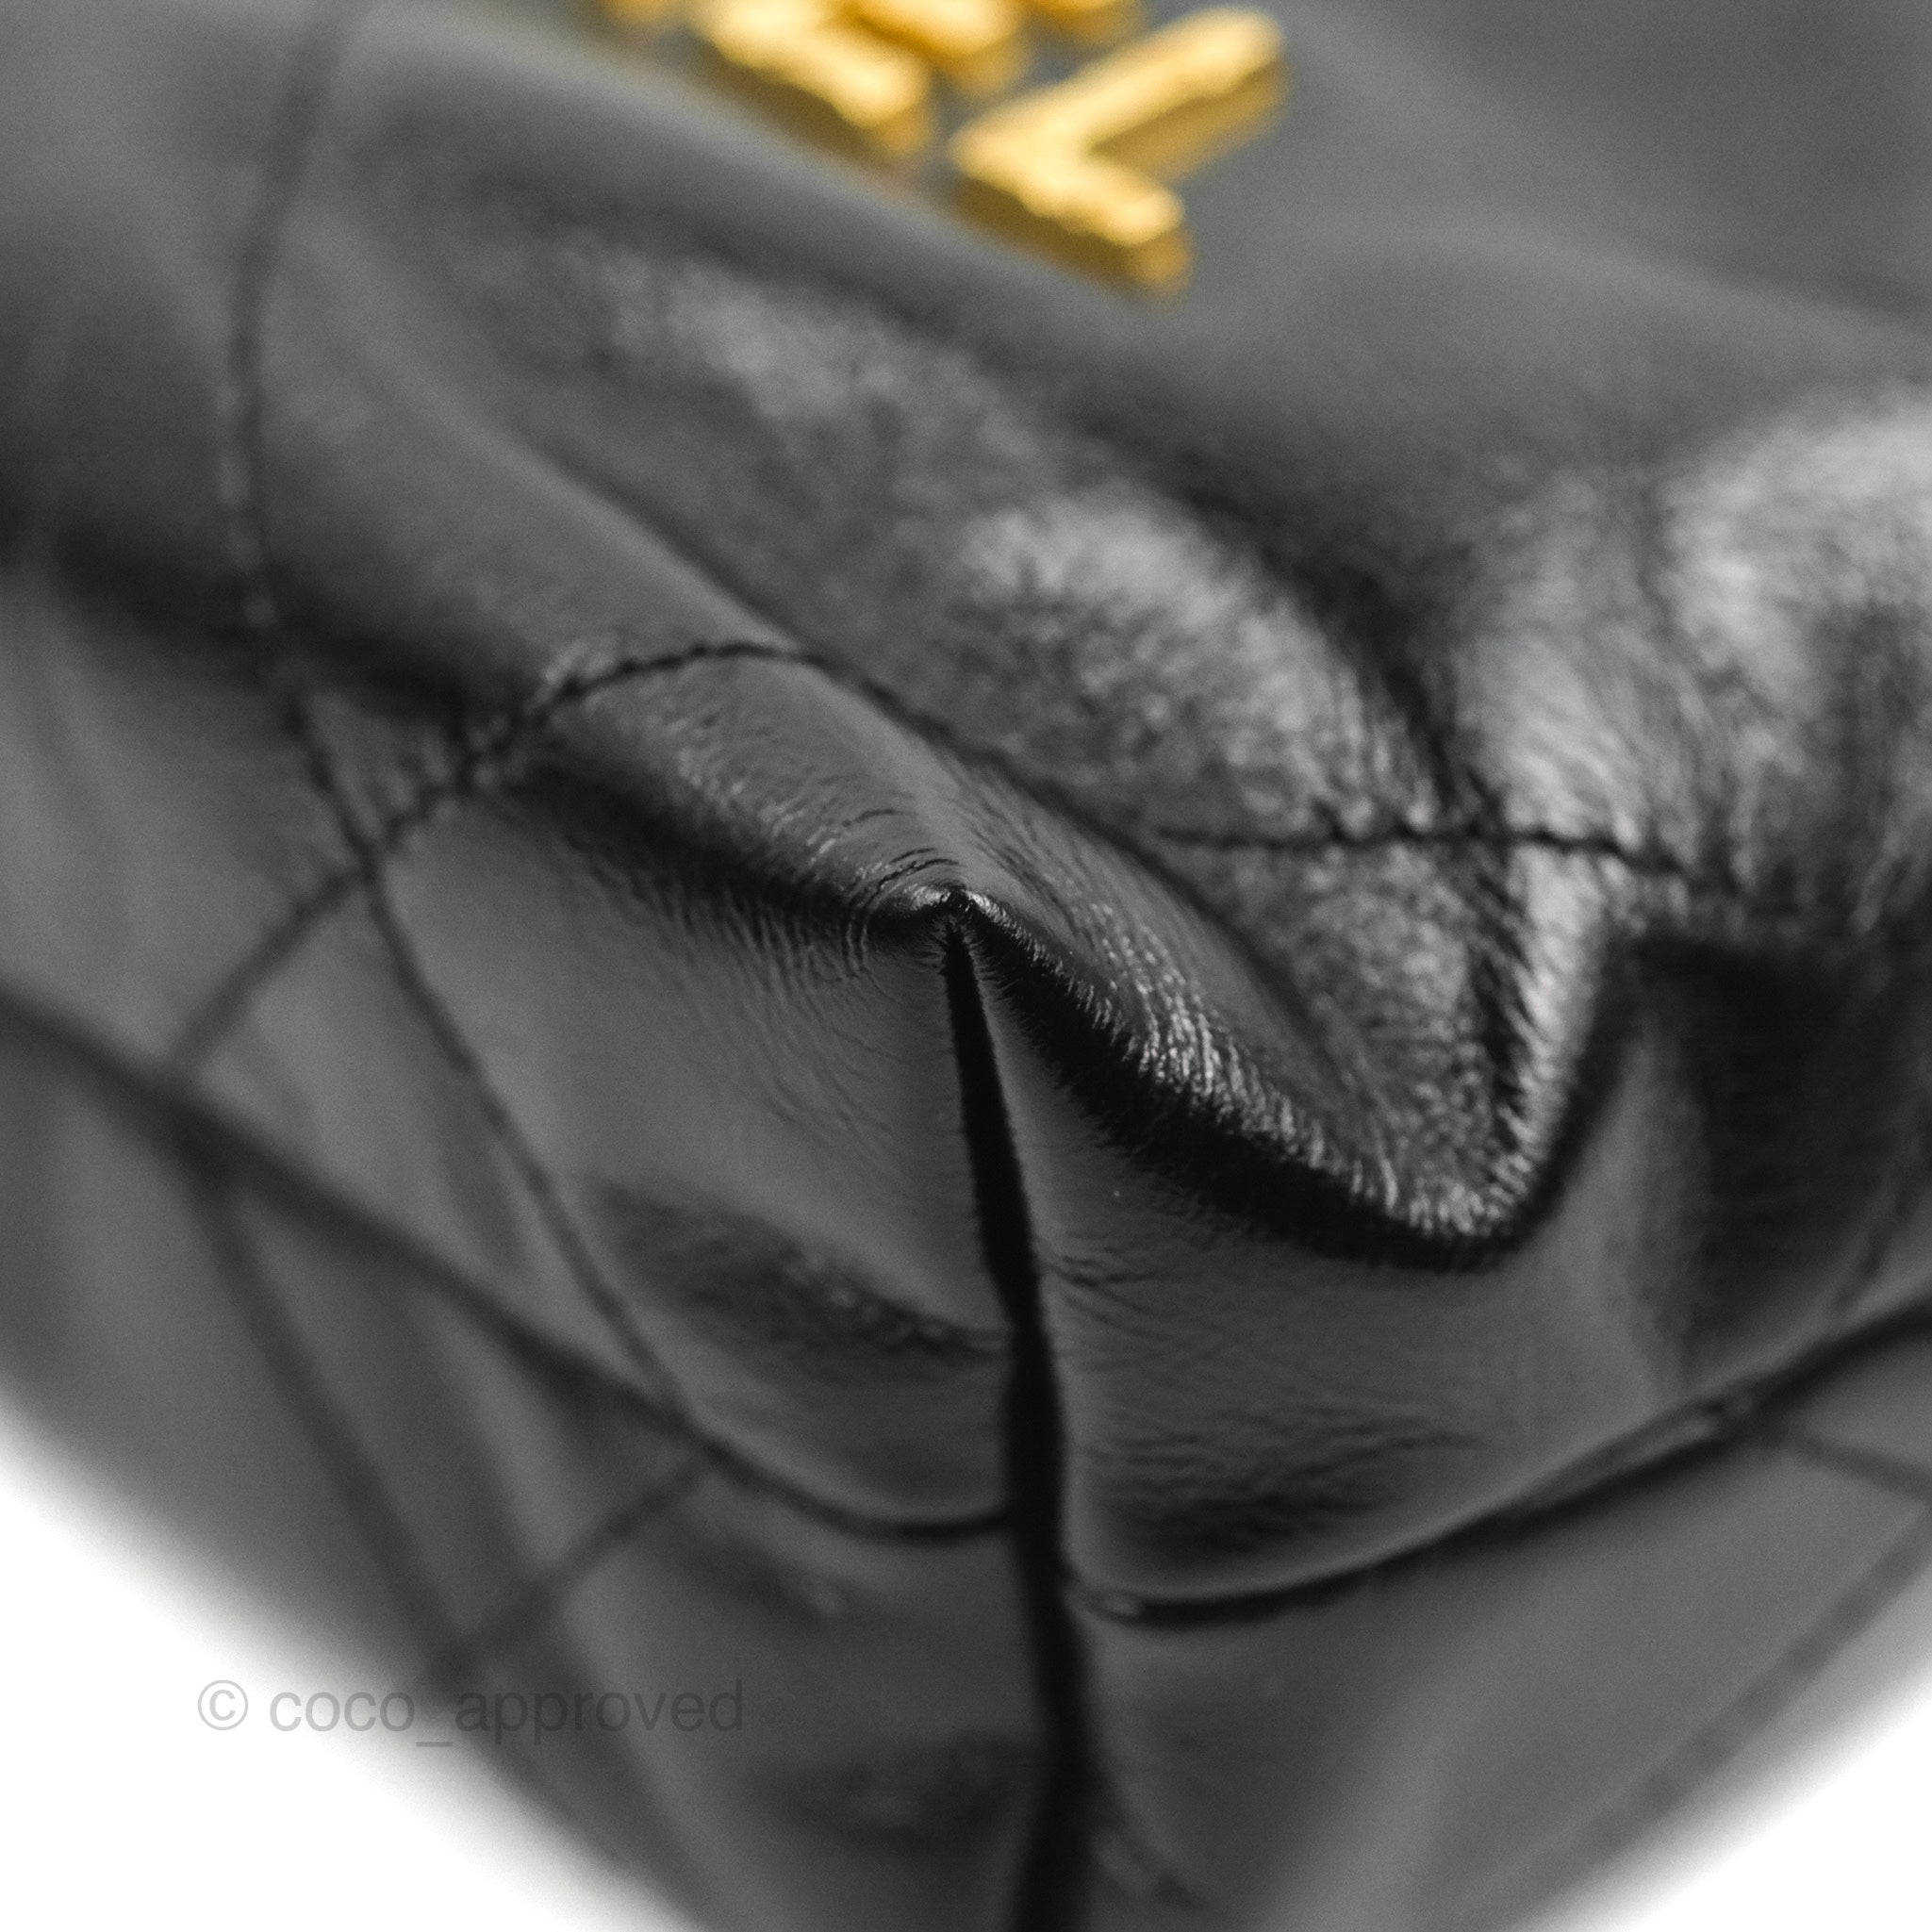 Authentic Chanel Bag 